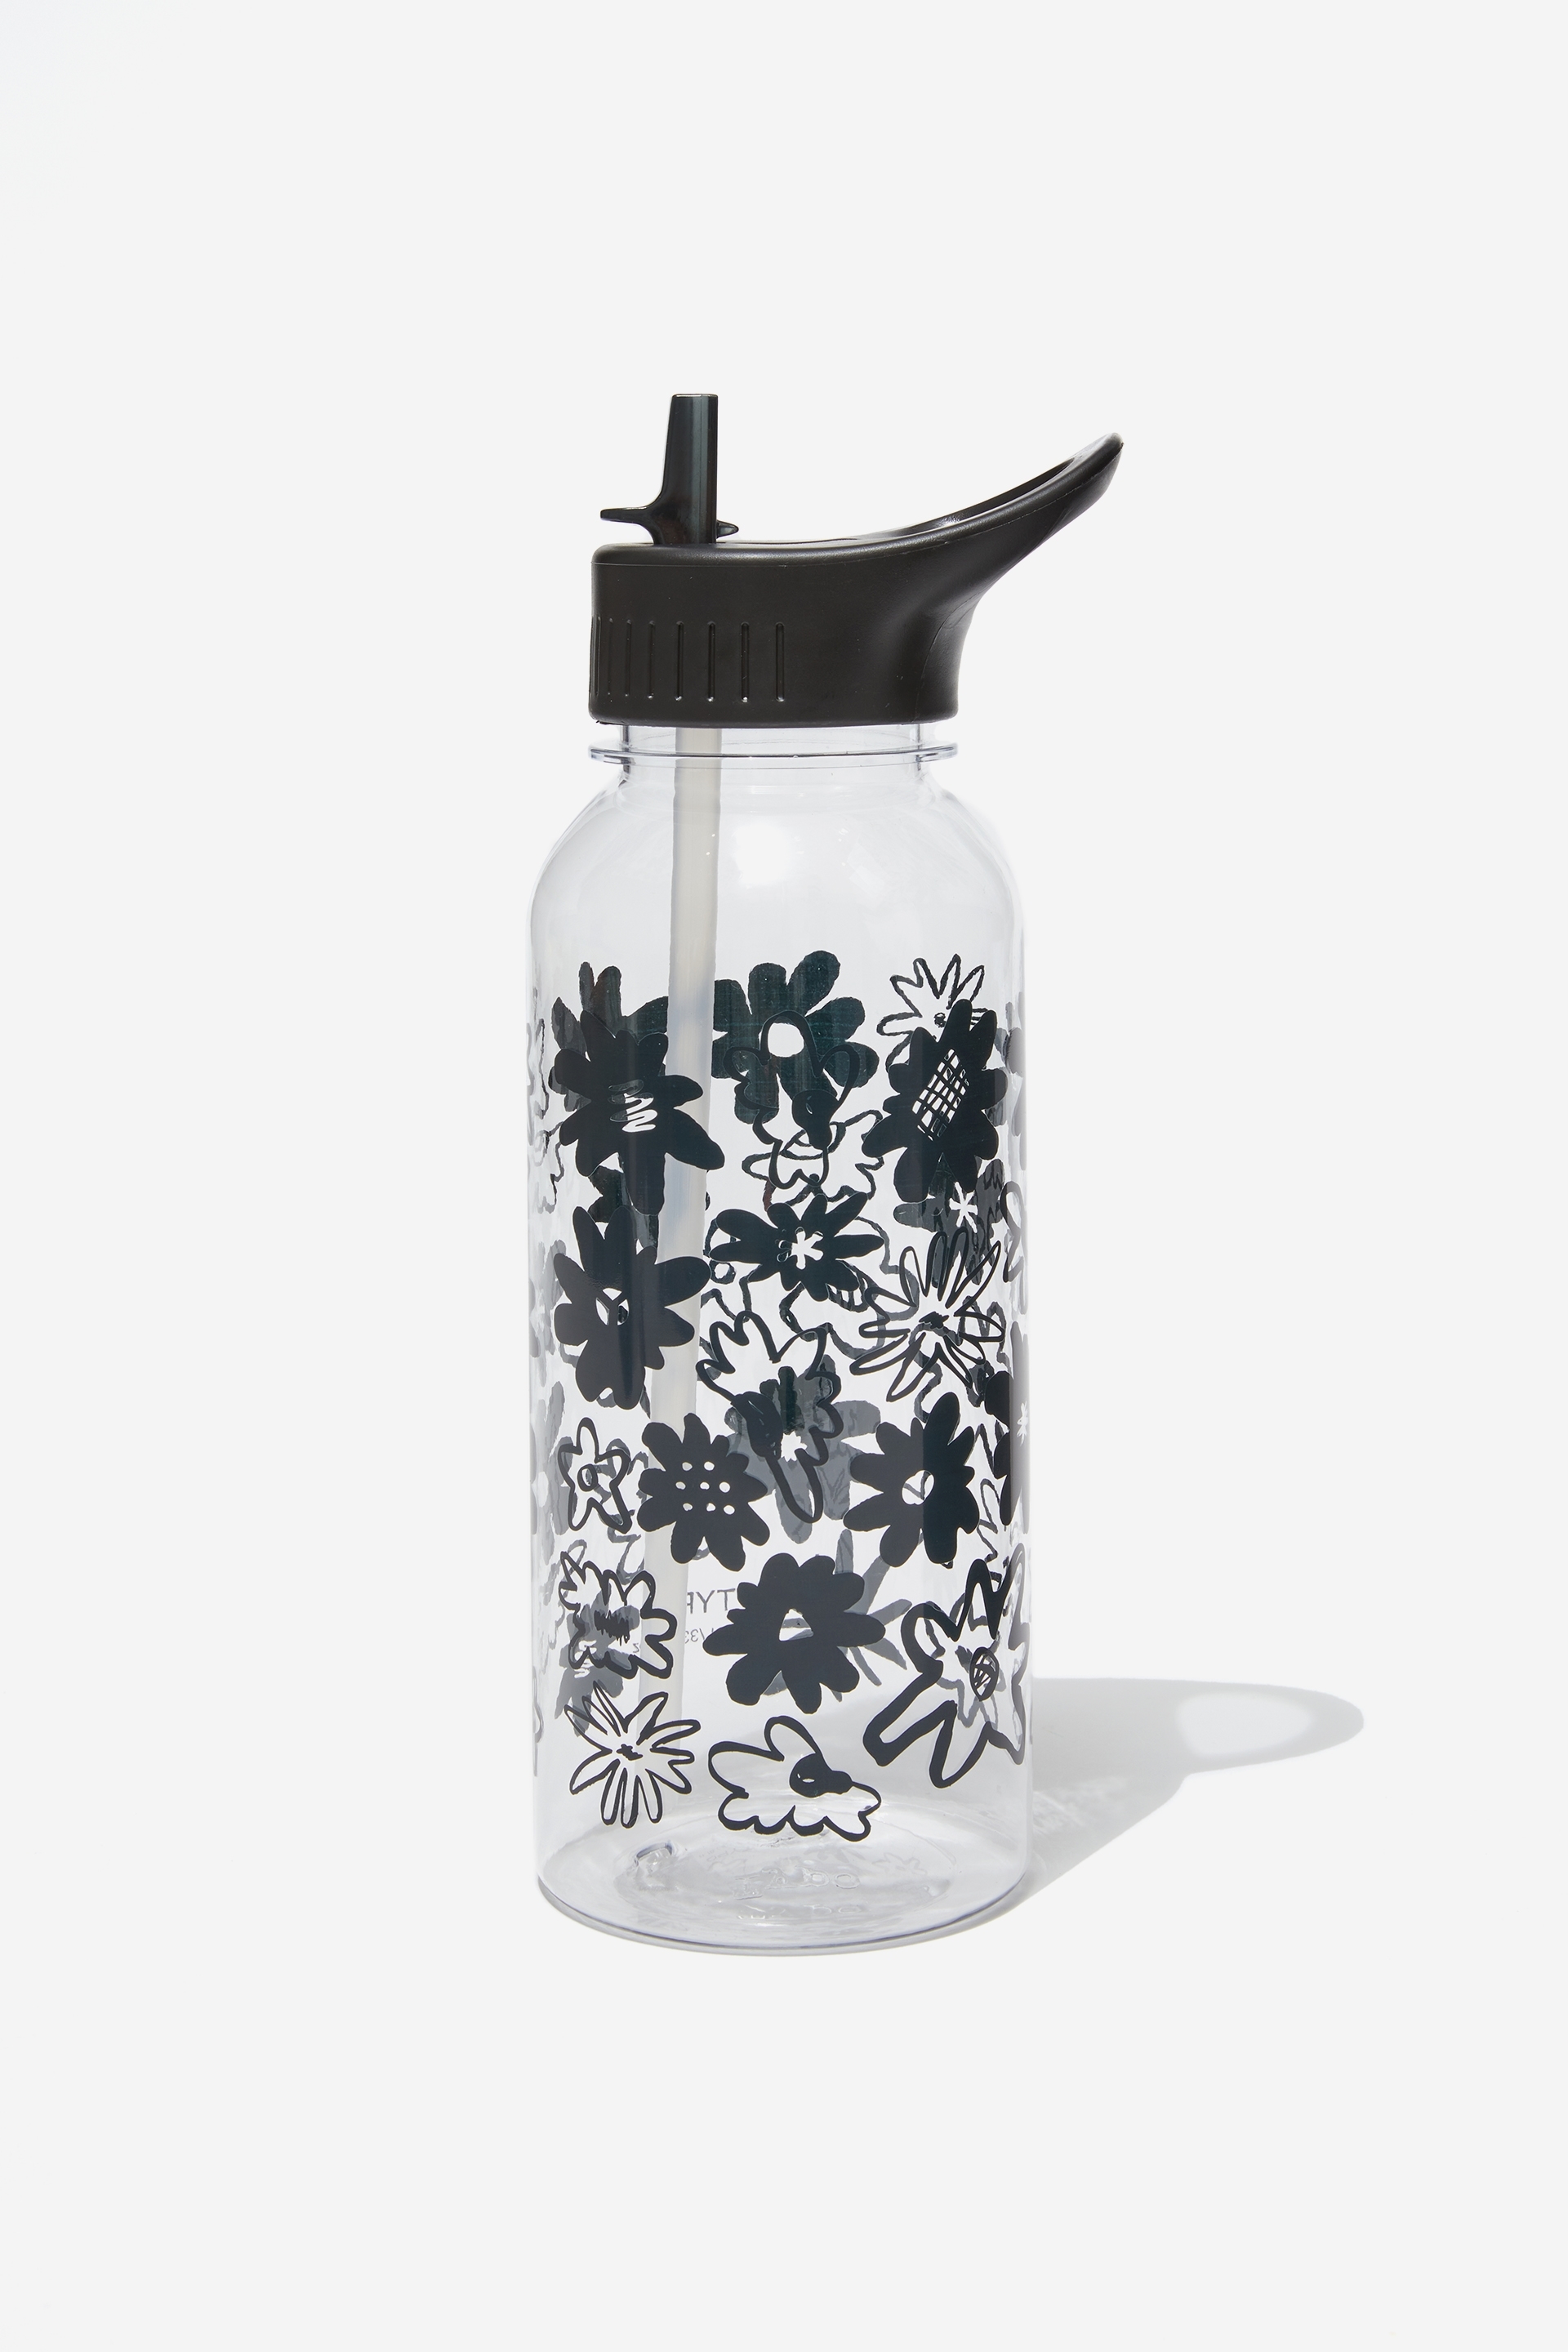 Typo - Drink It Up Bottle - Lulu black white floral